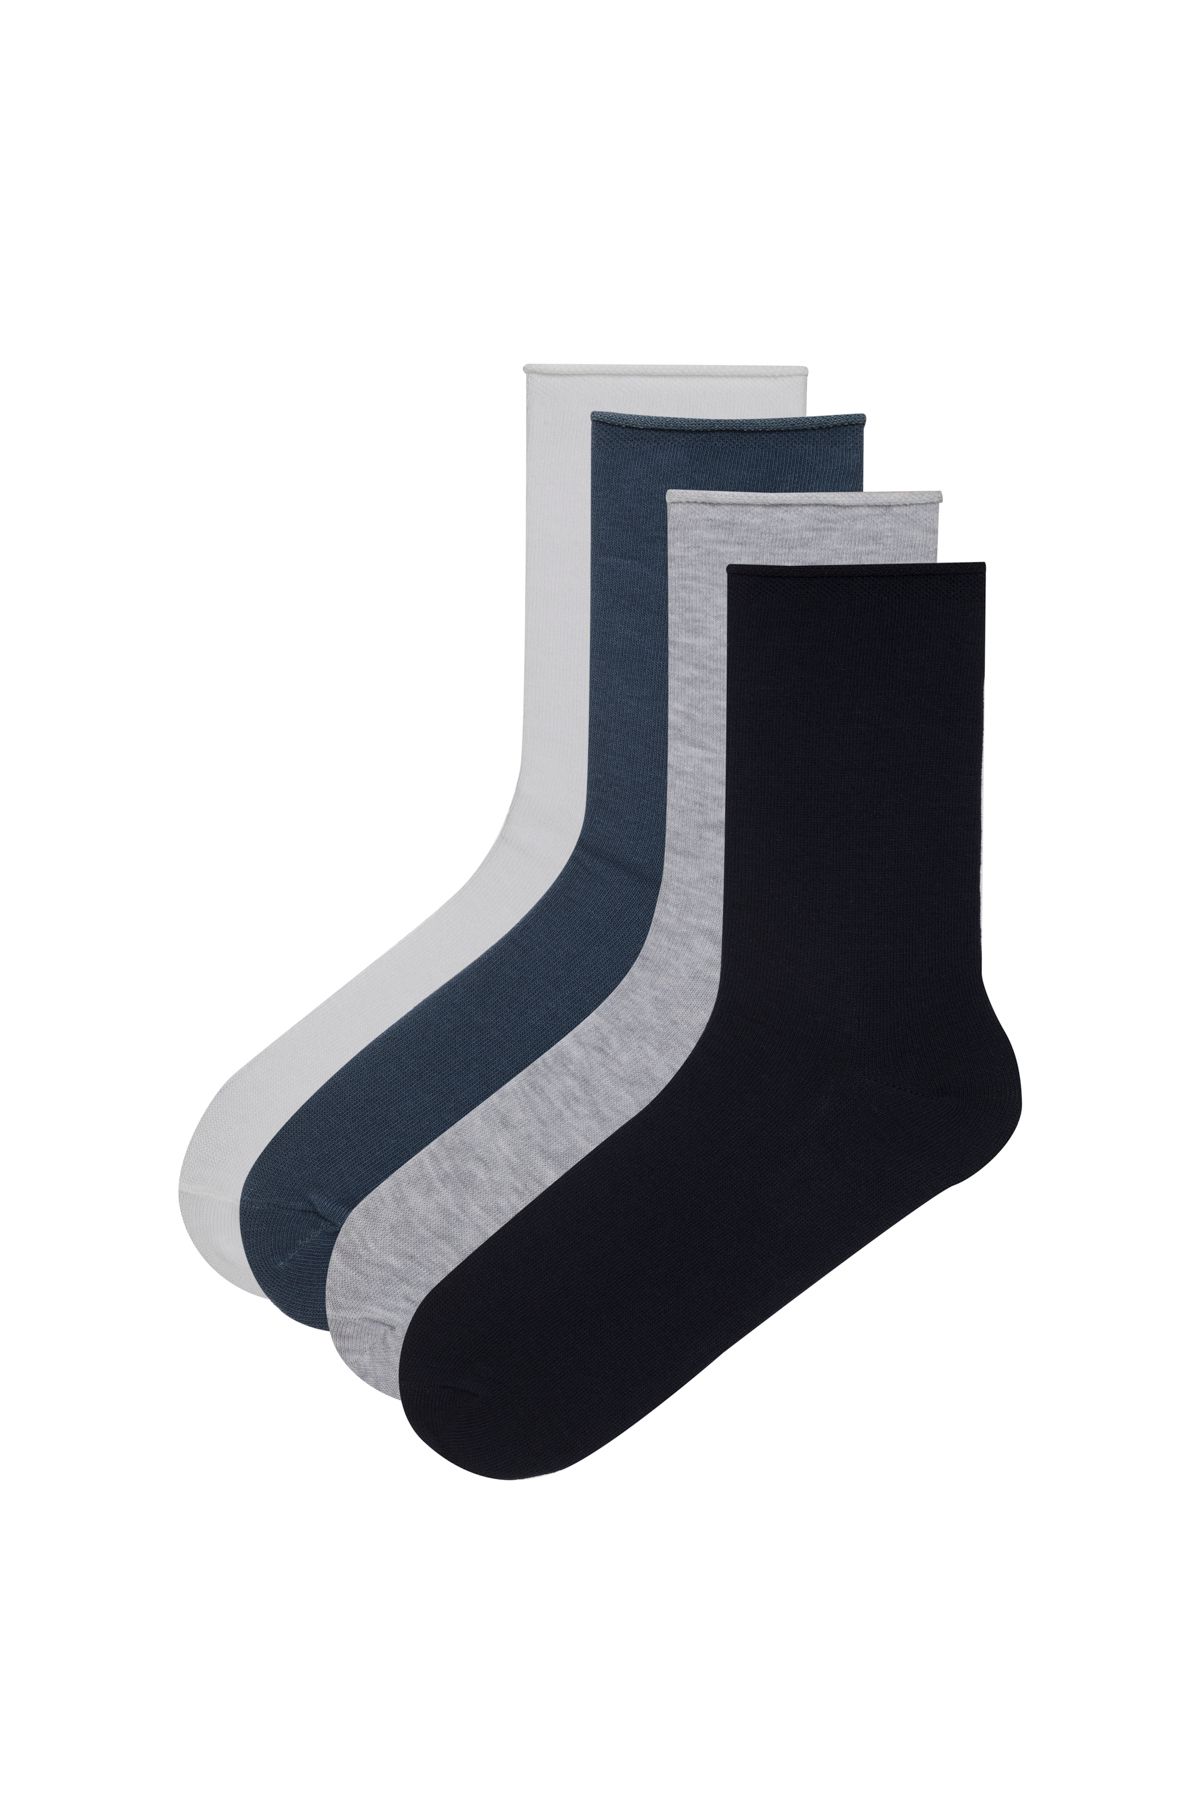 Penti Simple 4lü Mavi Soket Çorap